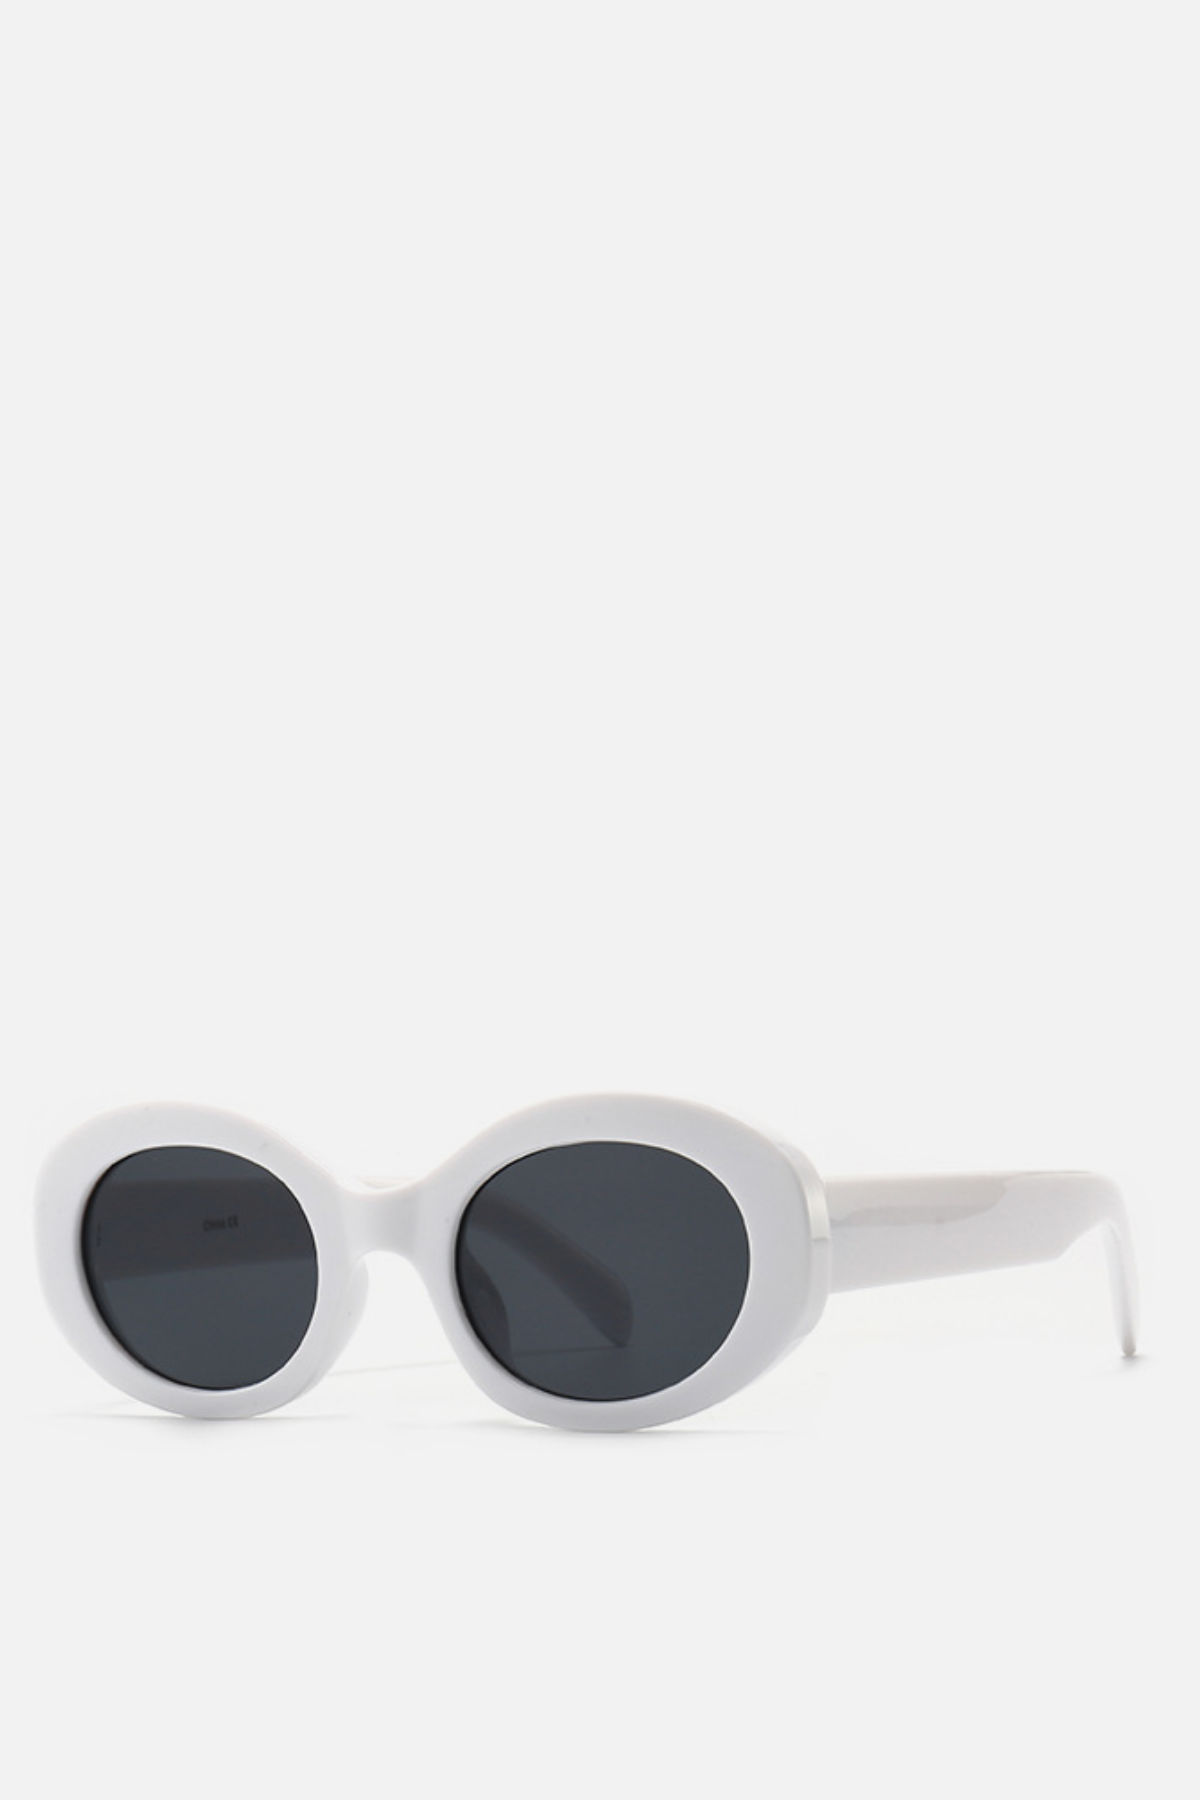 LIMA White Round Sunglasses